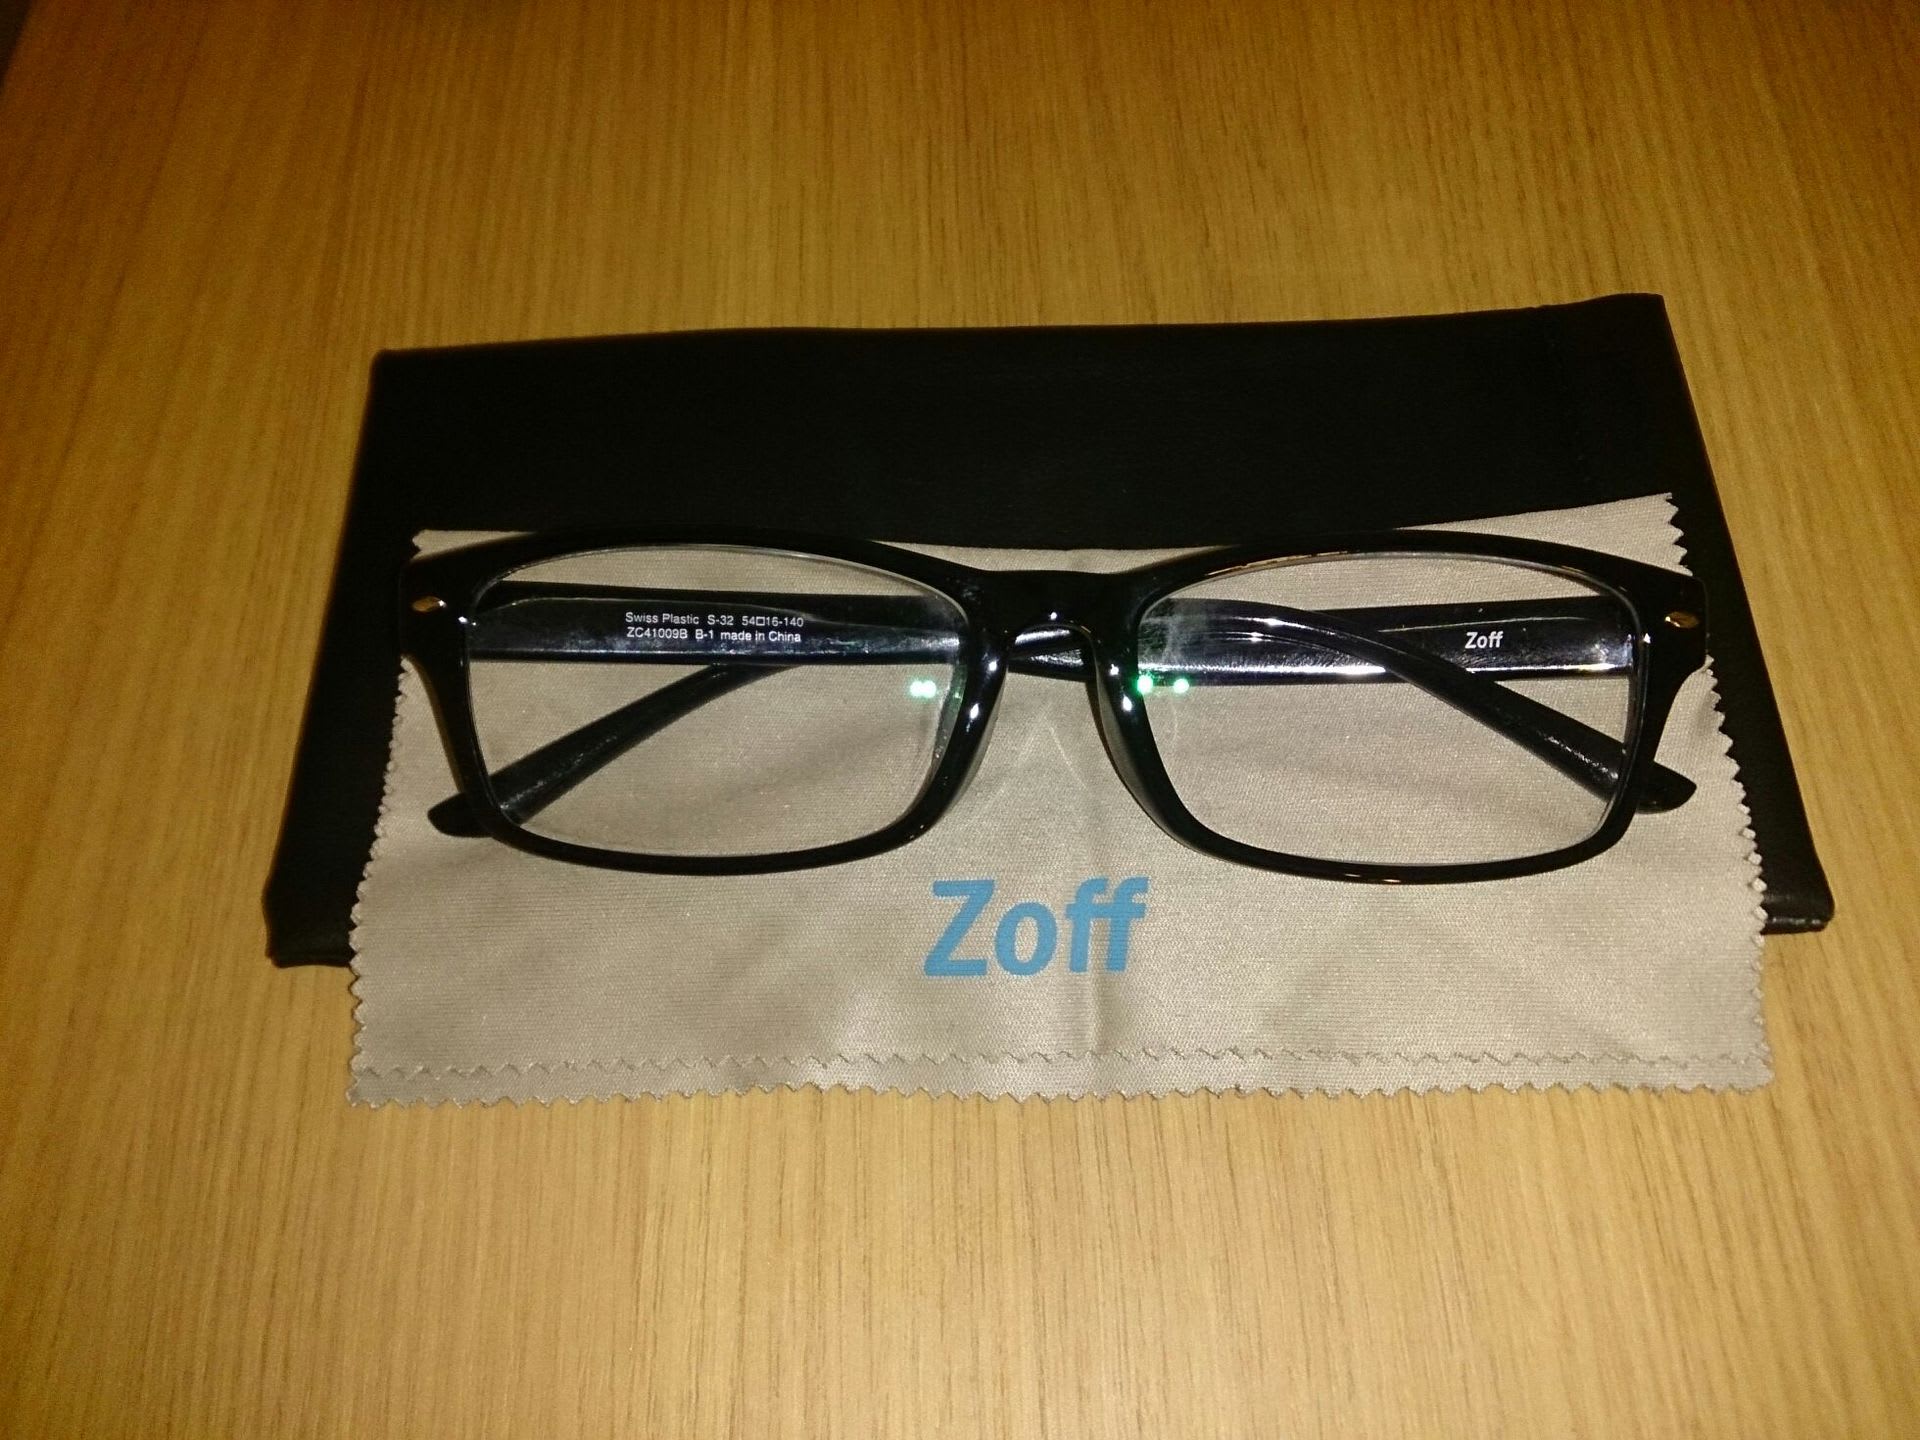 Zoff 老眼鏡 Zoffから新しい老眼鏡が発売されました！「Zoff Reading